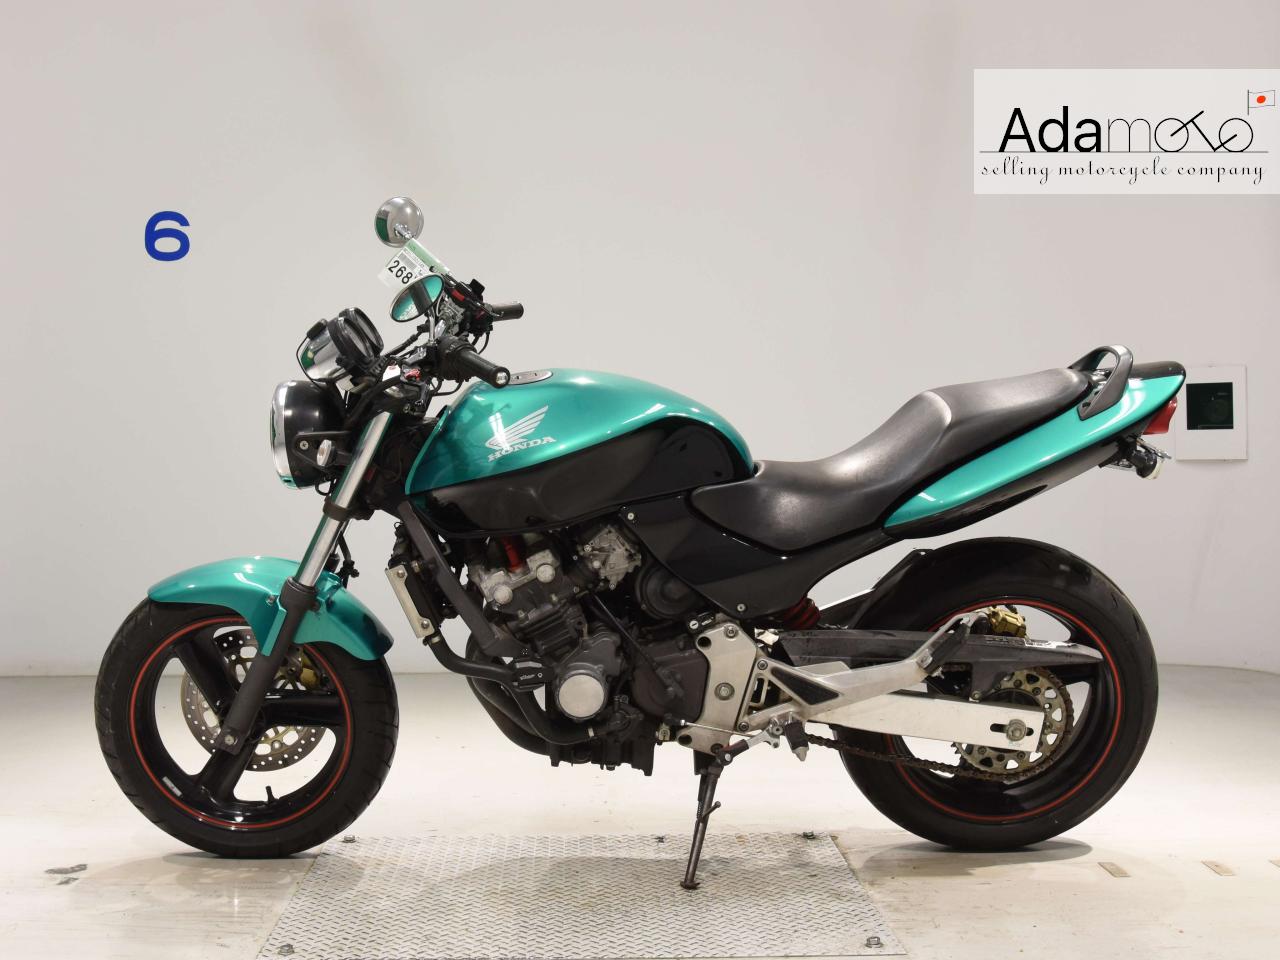 Honda HORNET250 - Adamoto - Motorcycles from Japan